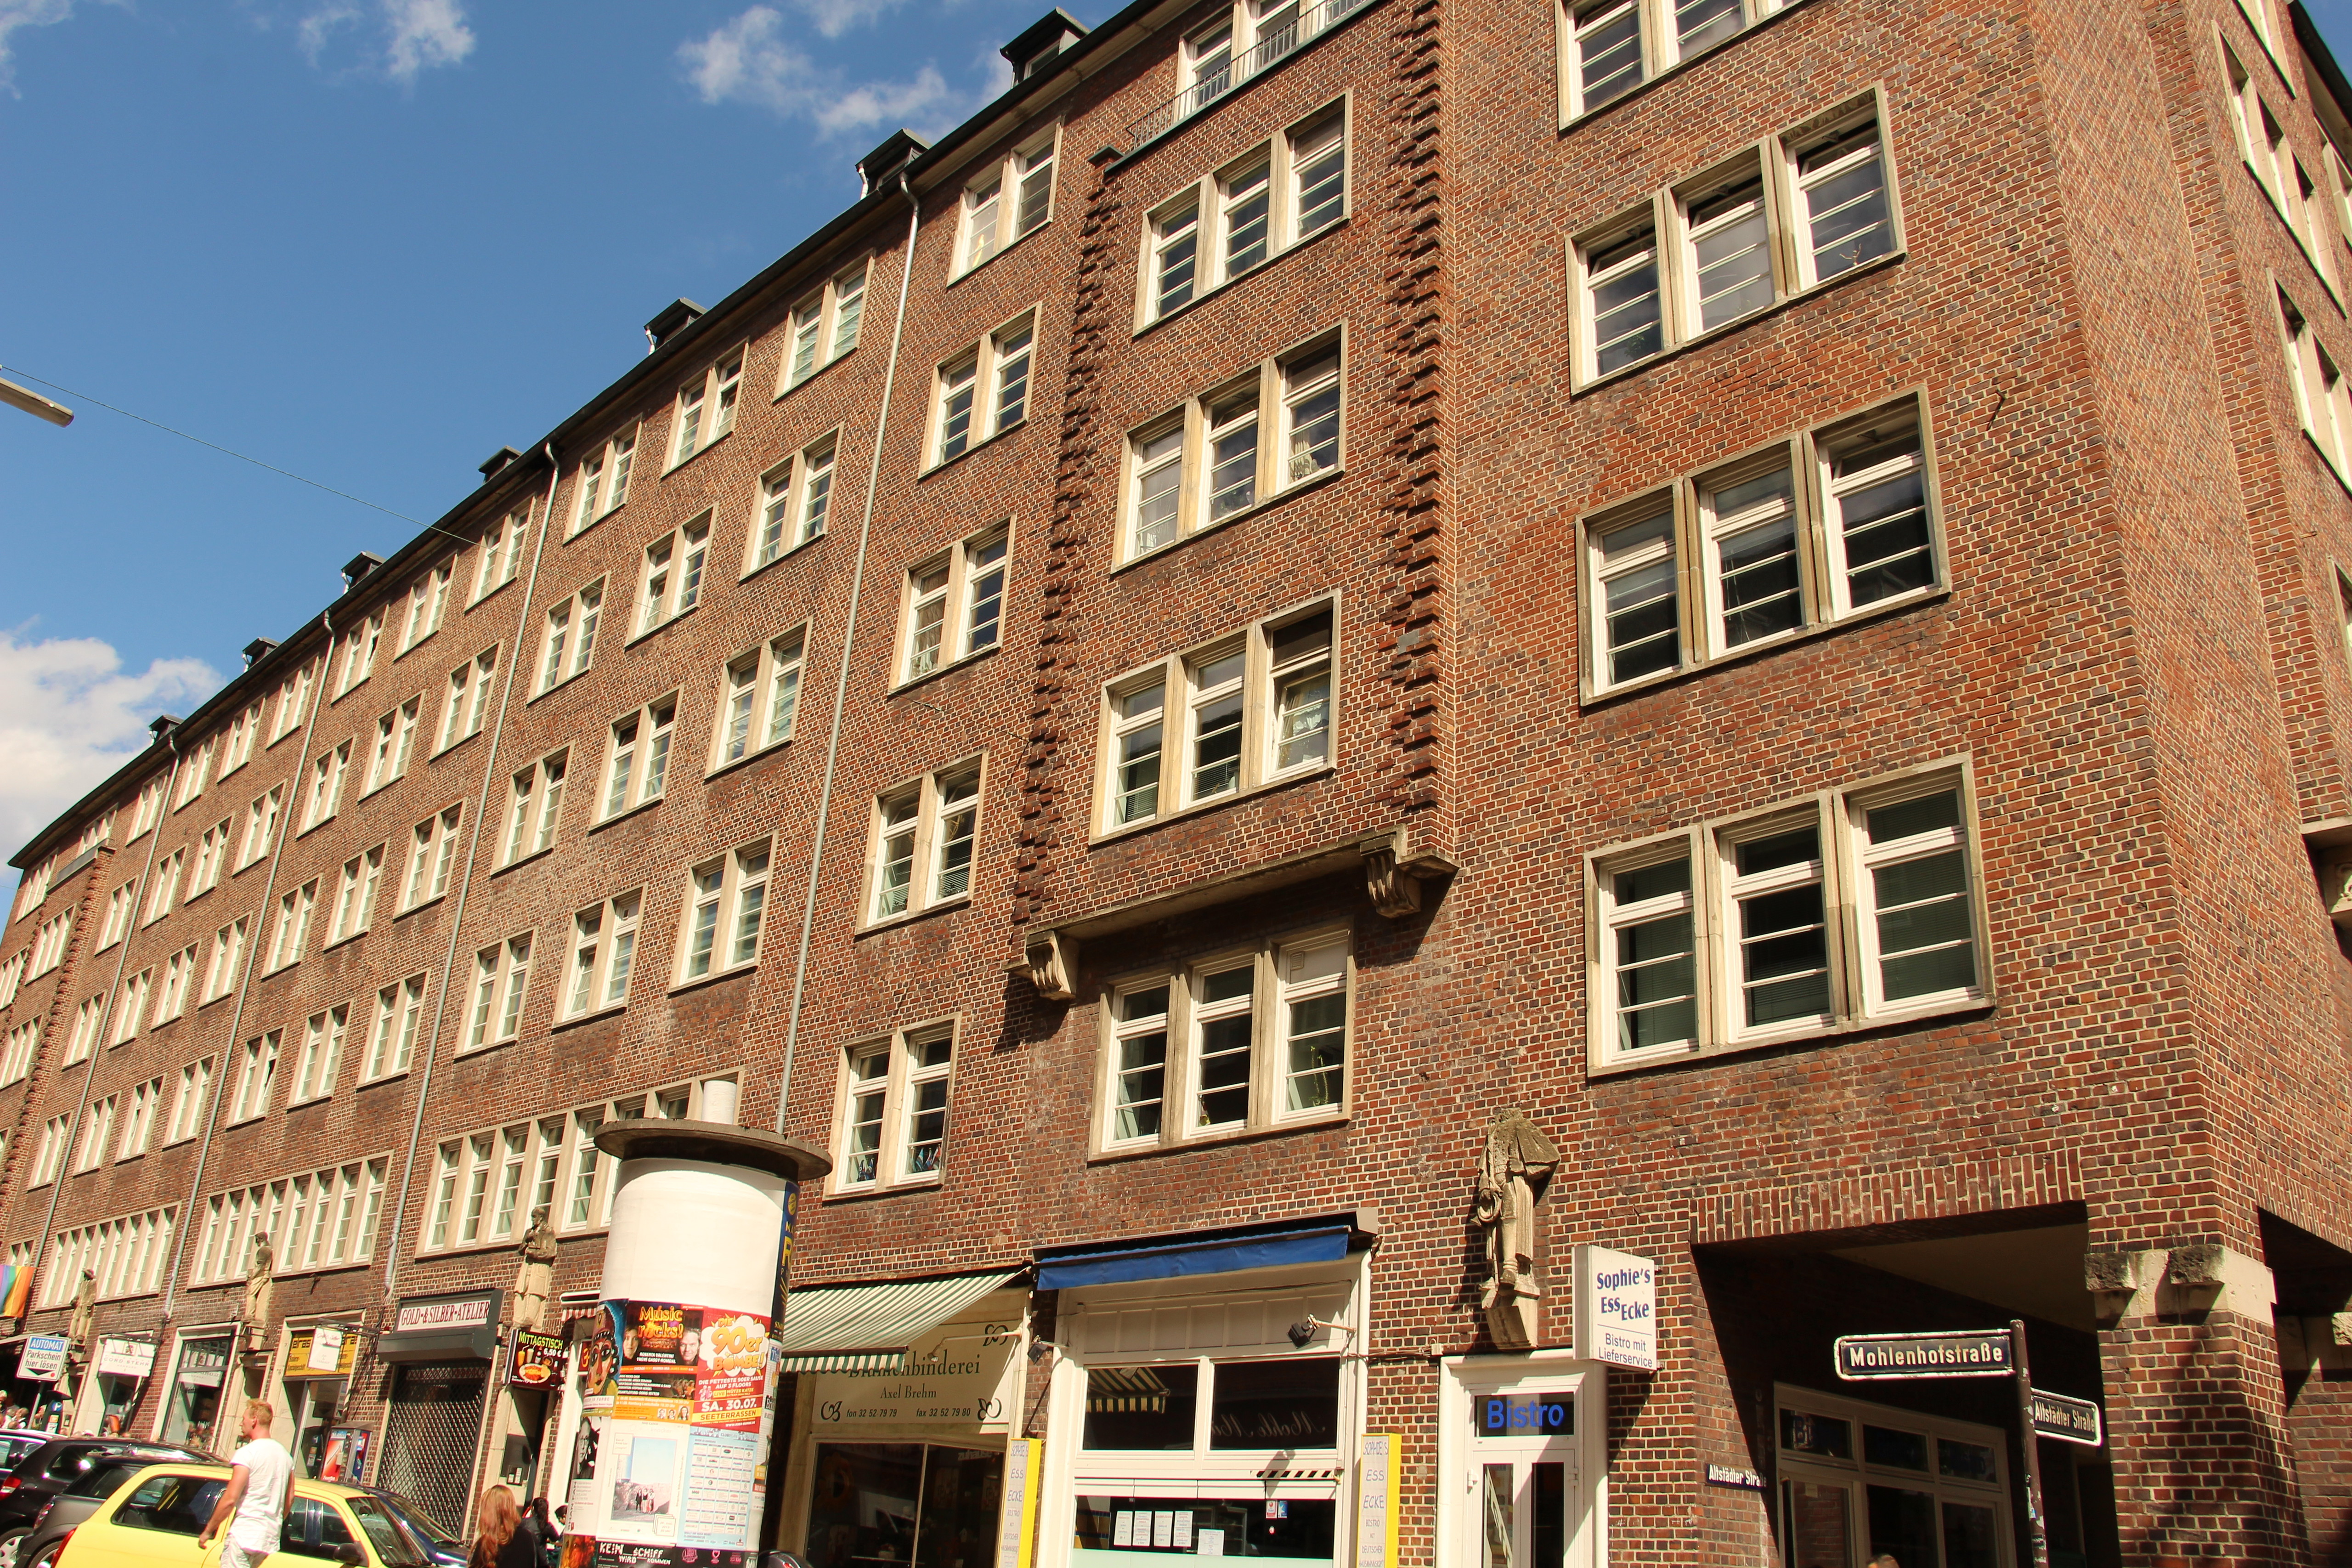 Kontorhausviertel Hamburg: Altstädter Hof | foto Fred Romero